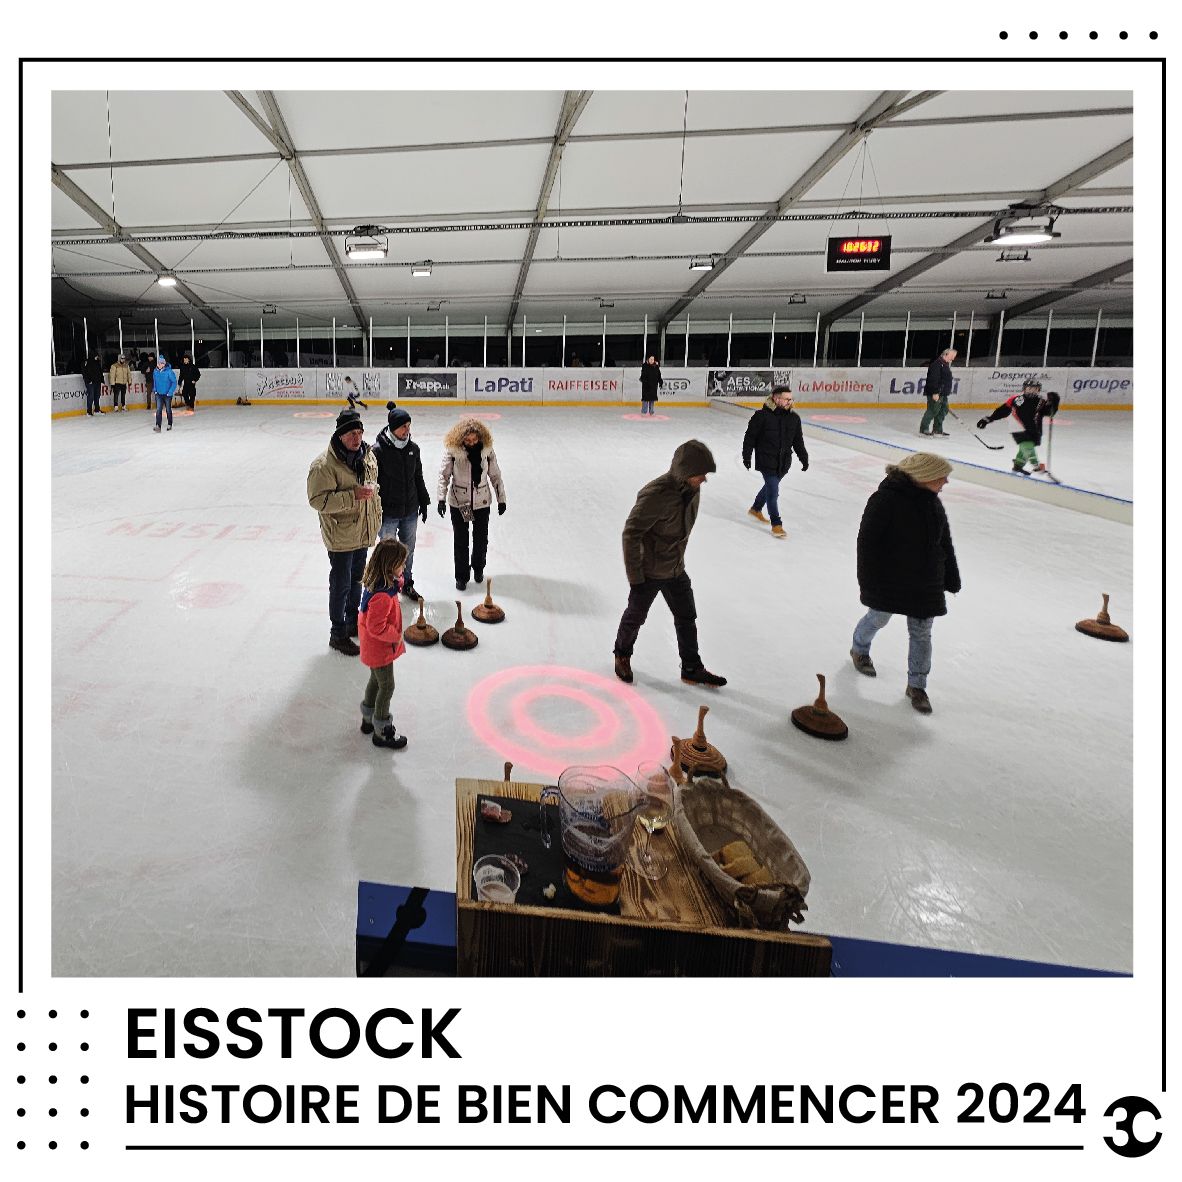 eisstock